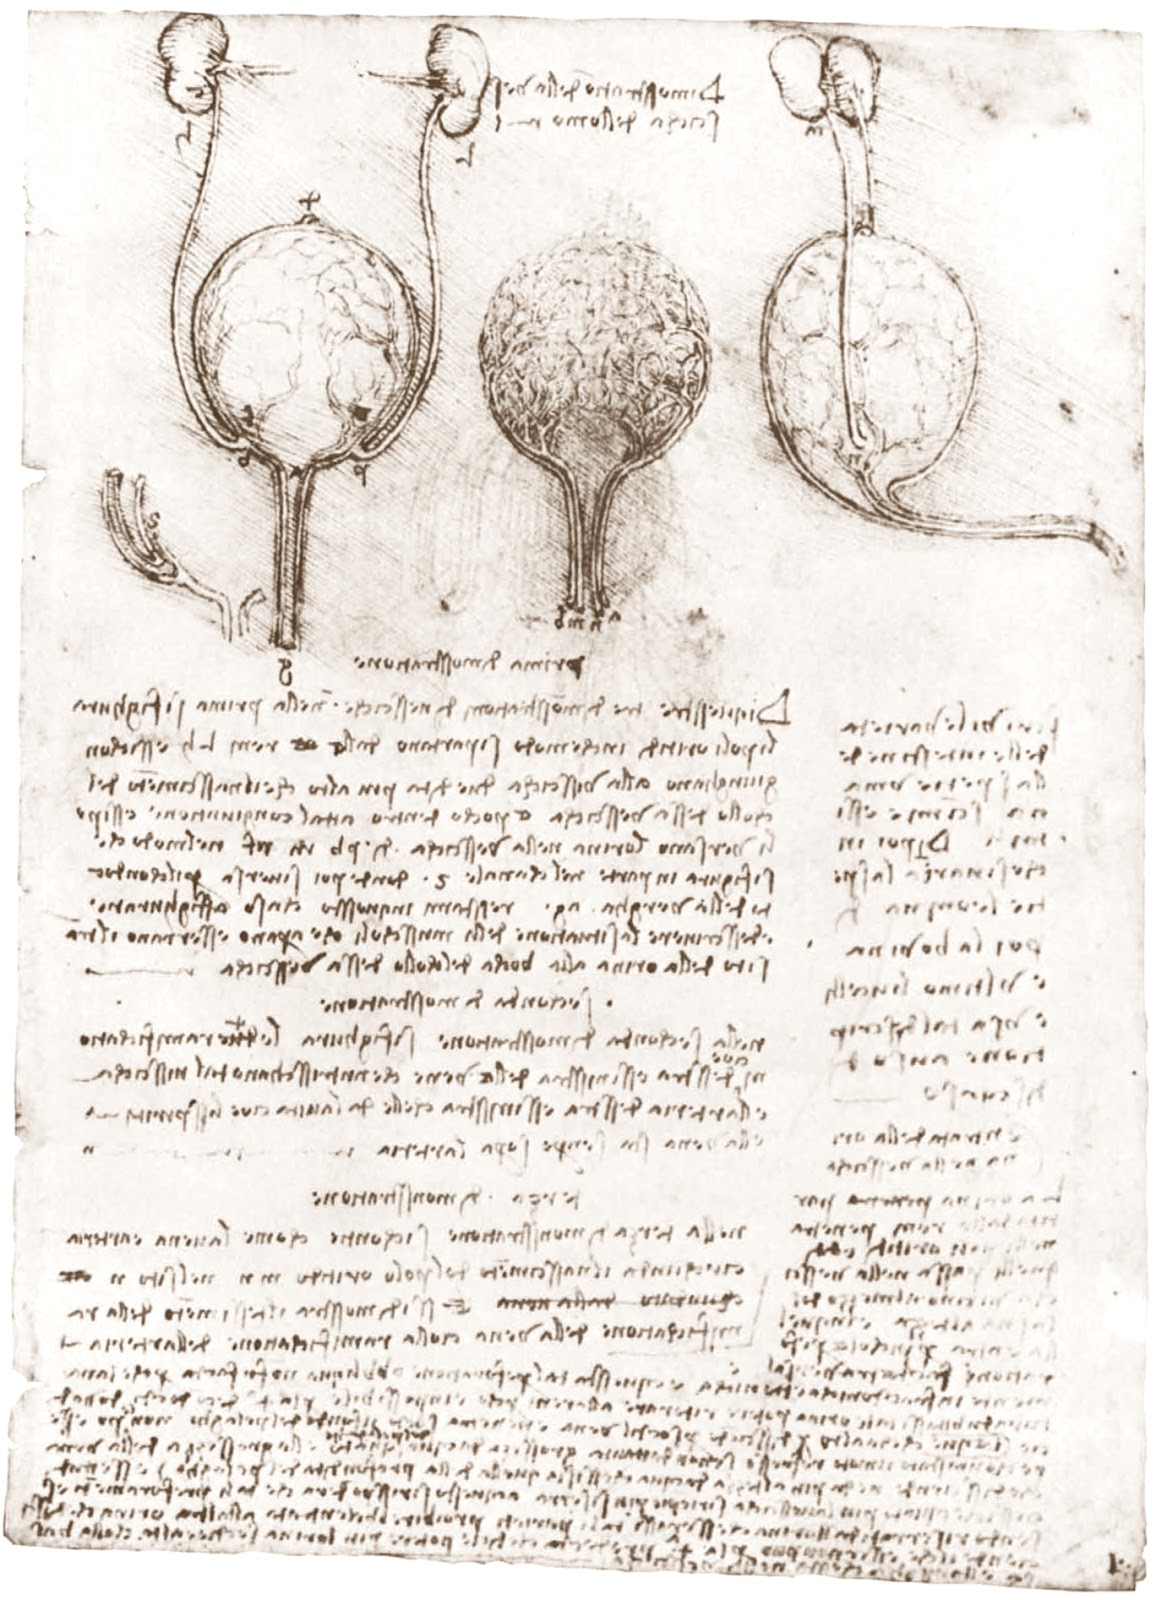 Leonardo+da+Vinci-1452-1519 (768).jpg